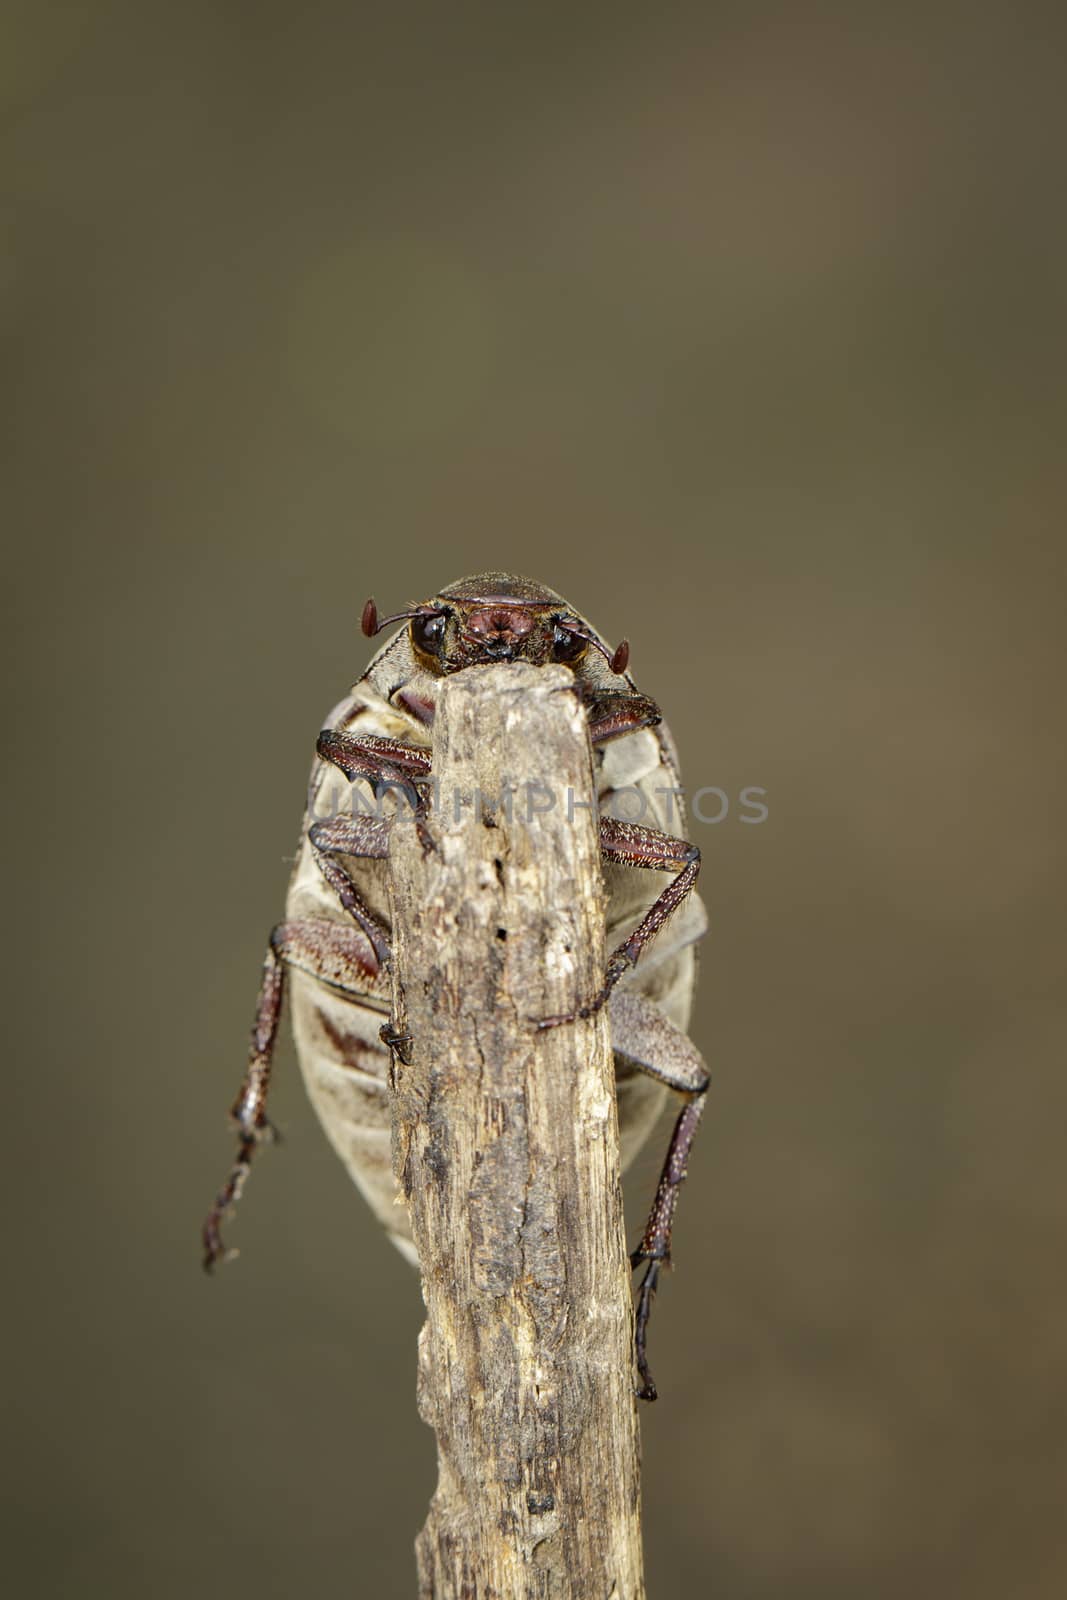 Image of cockchafer (Melolontha melolontha) on a branch on a nat by yod67